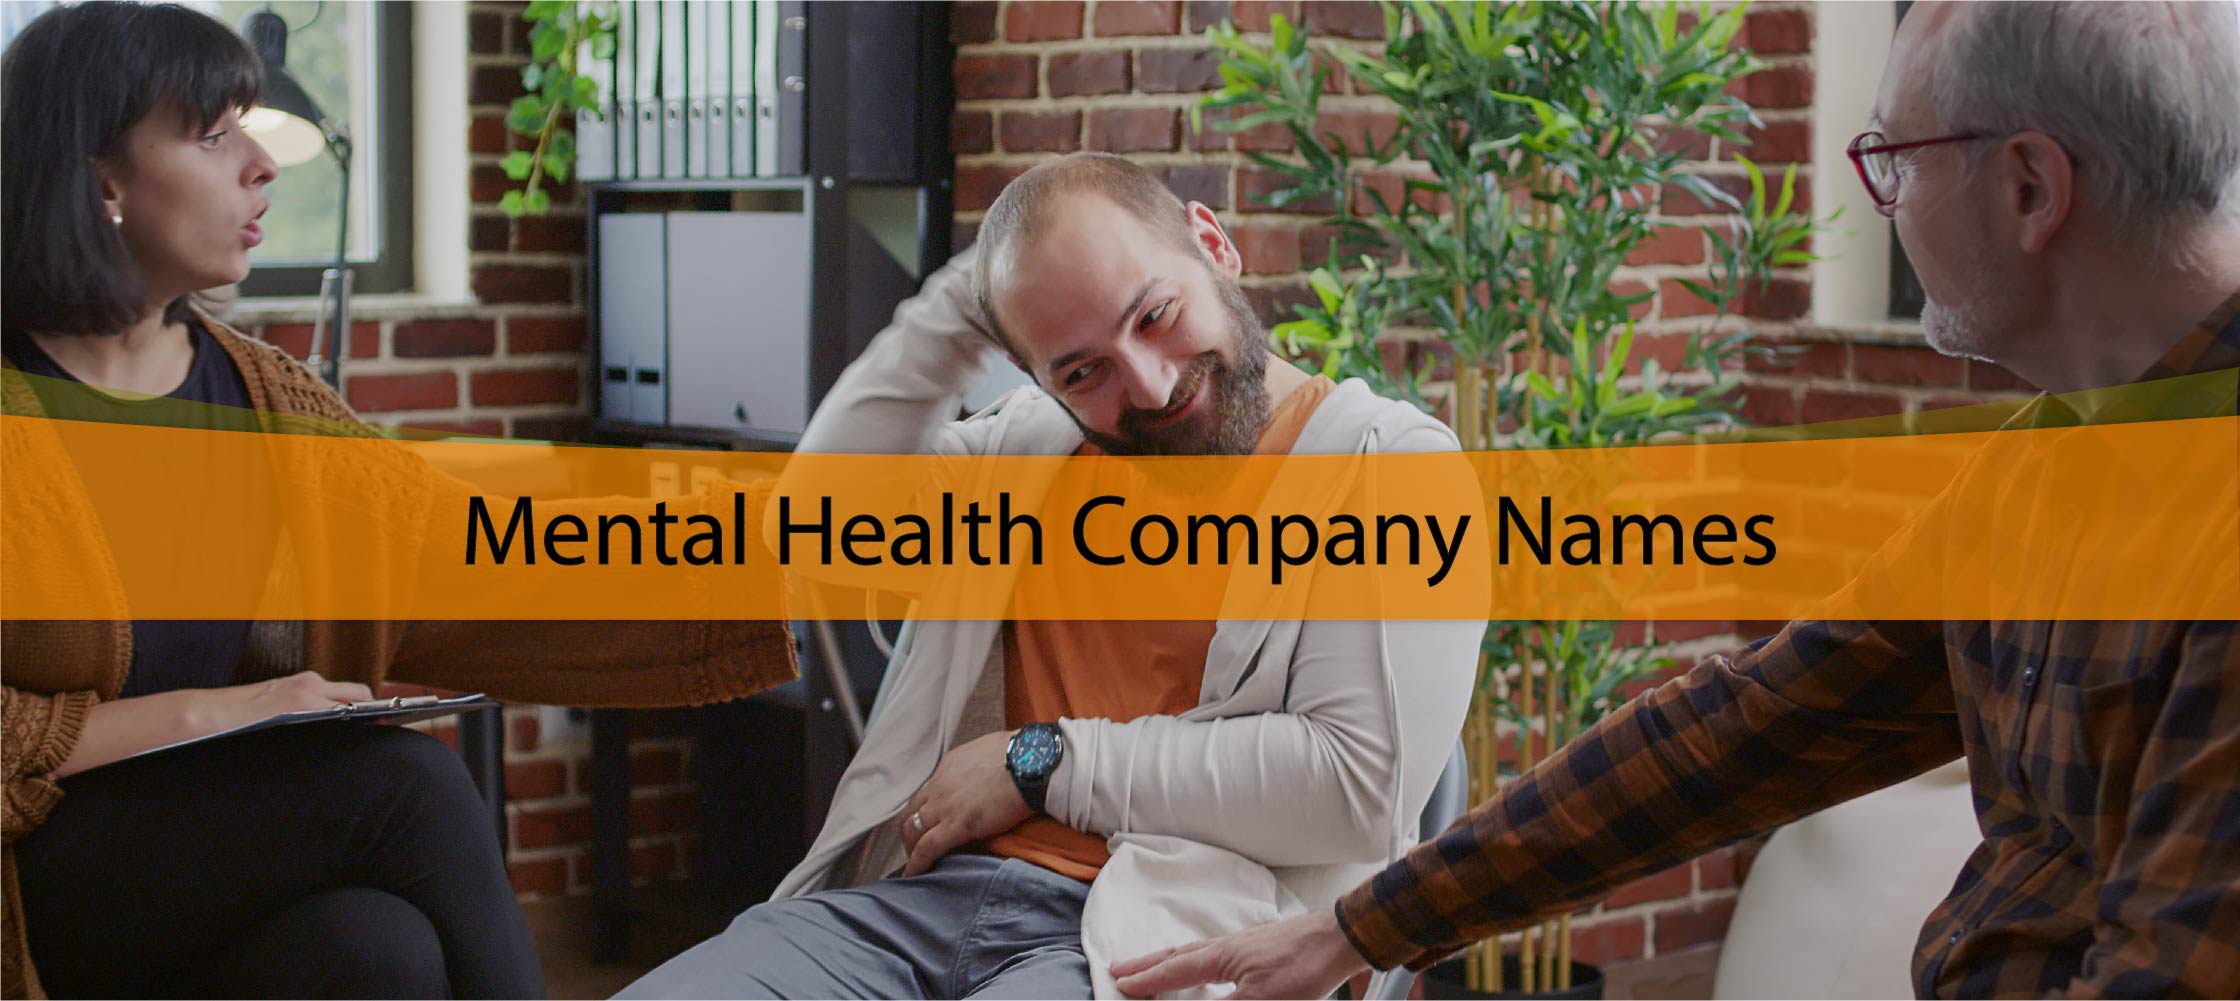 Mental Health Company Names